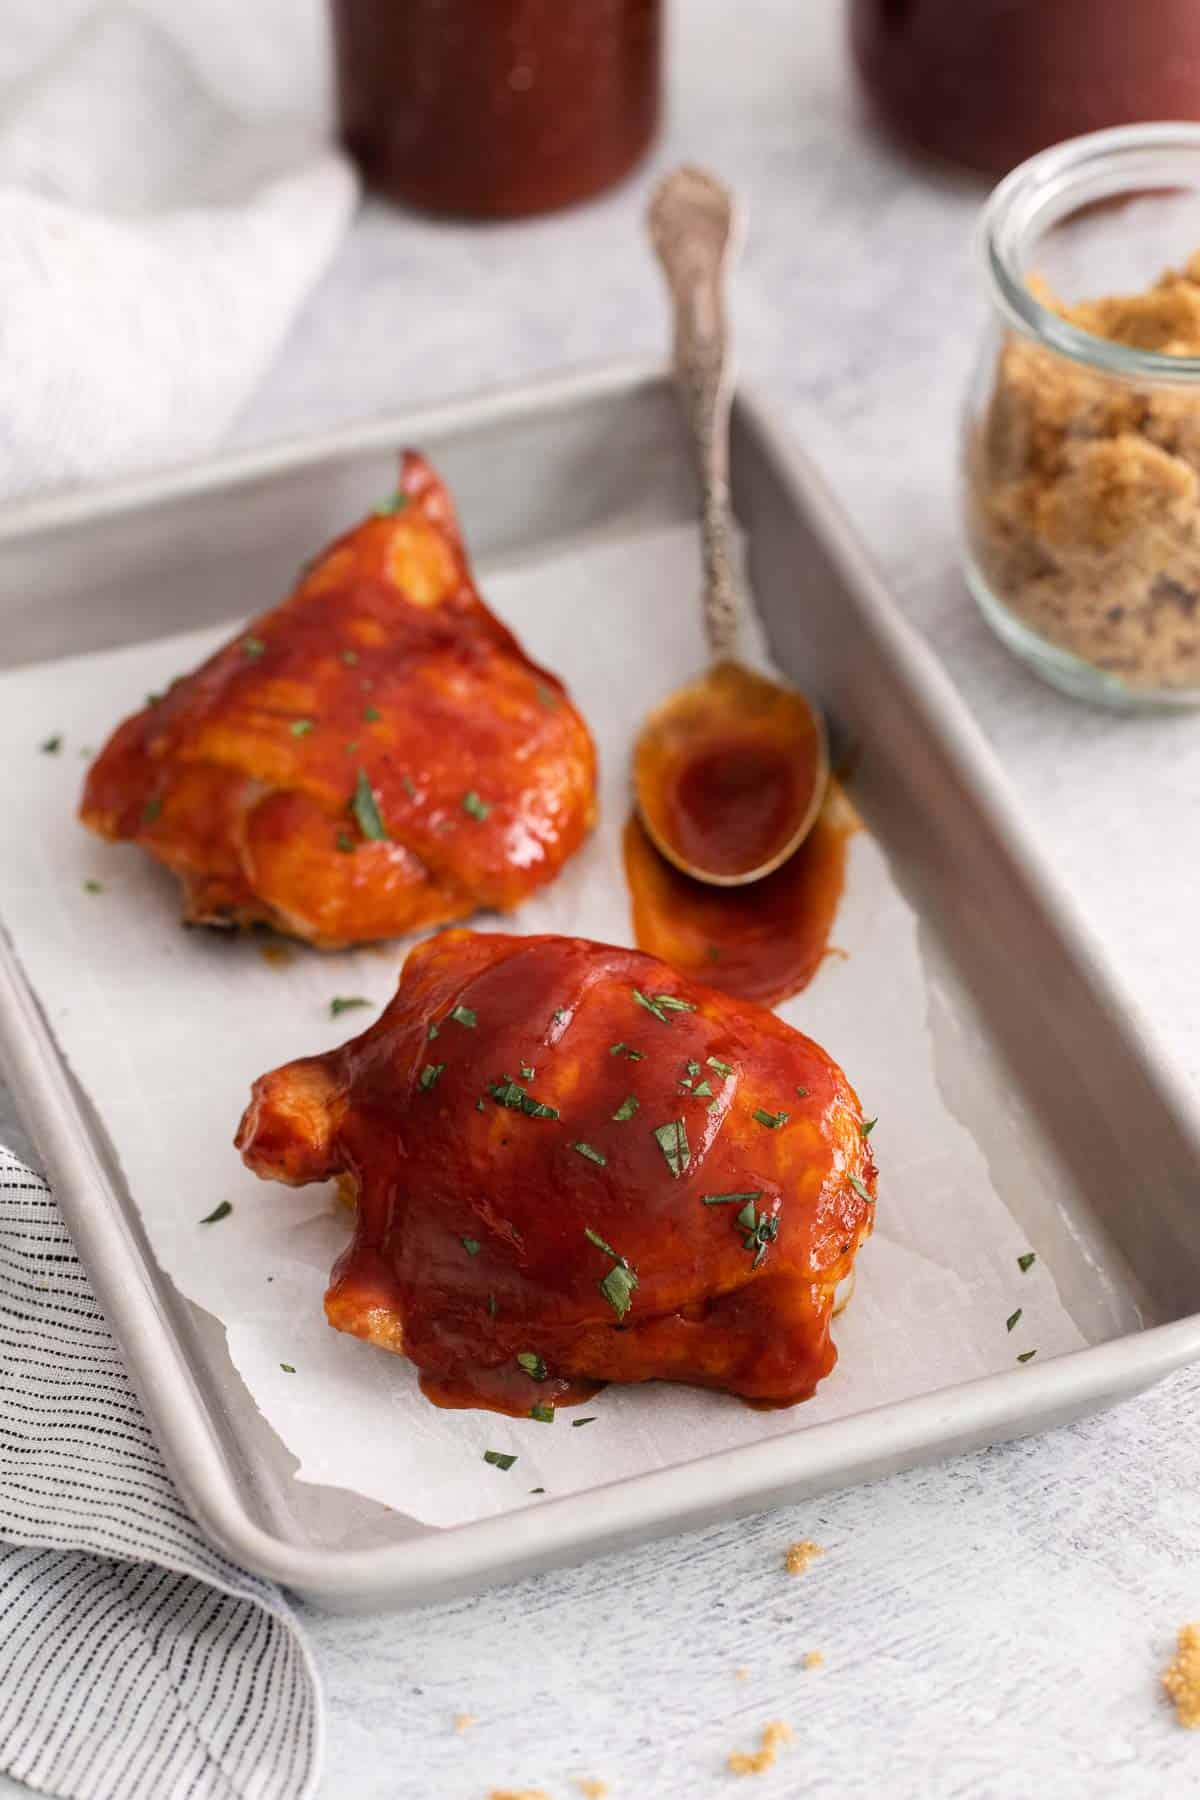 Gluten-free BBQ sauce spread over chicken on a baking sheet